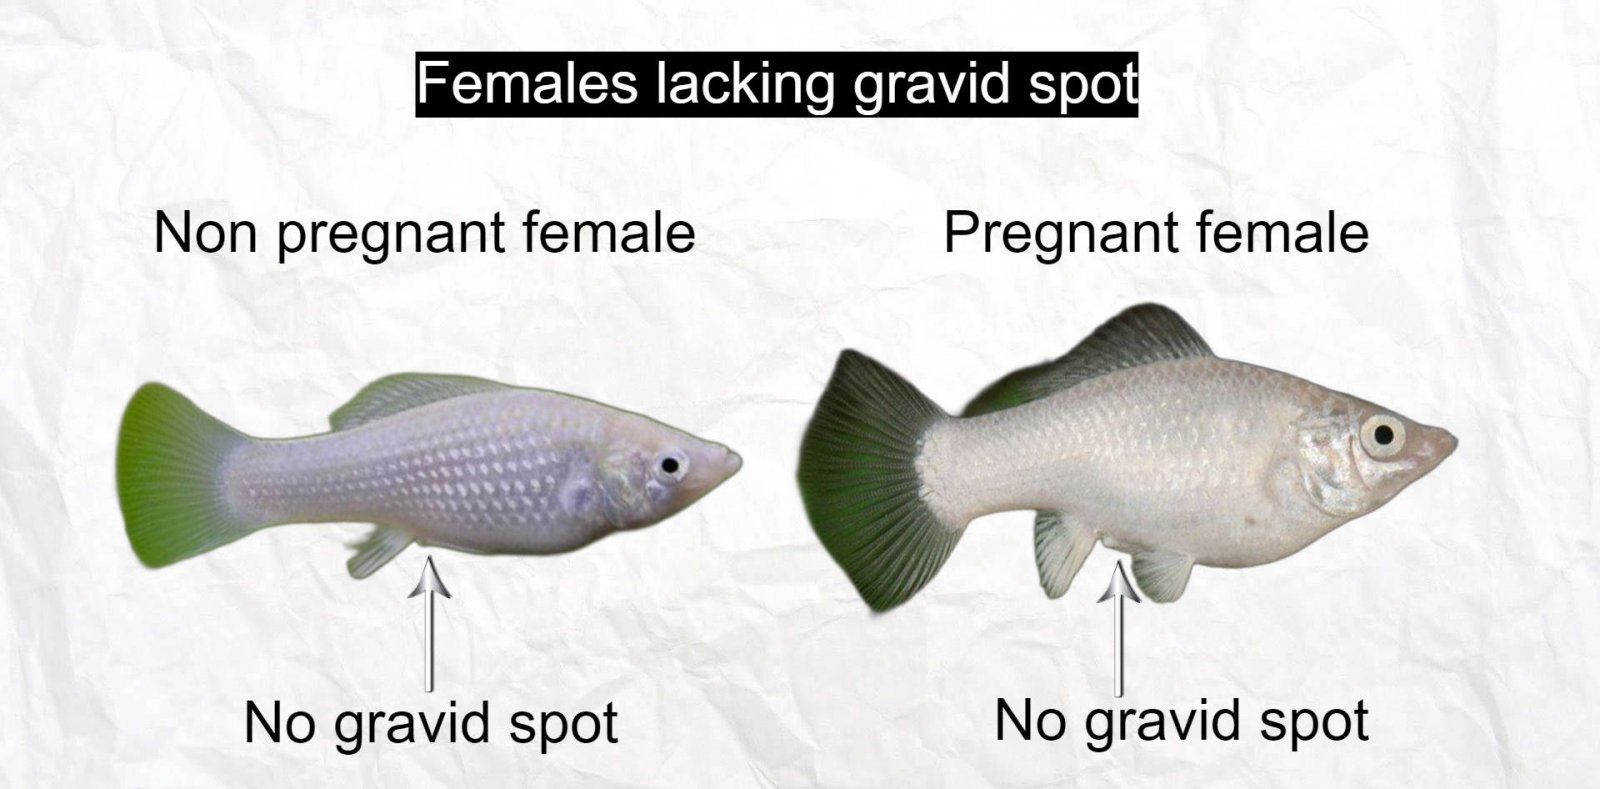 female lacking gravid spot.jpg